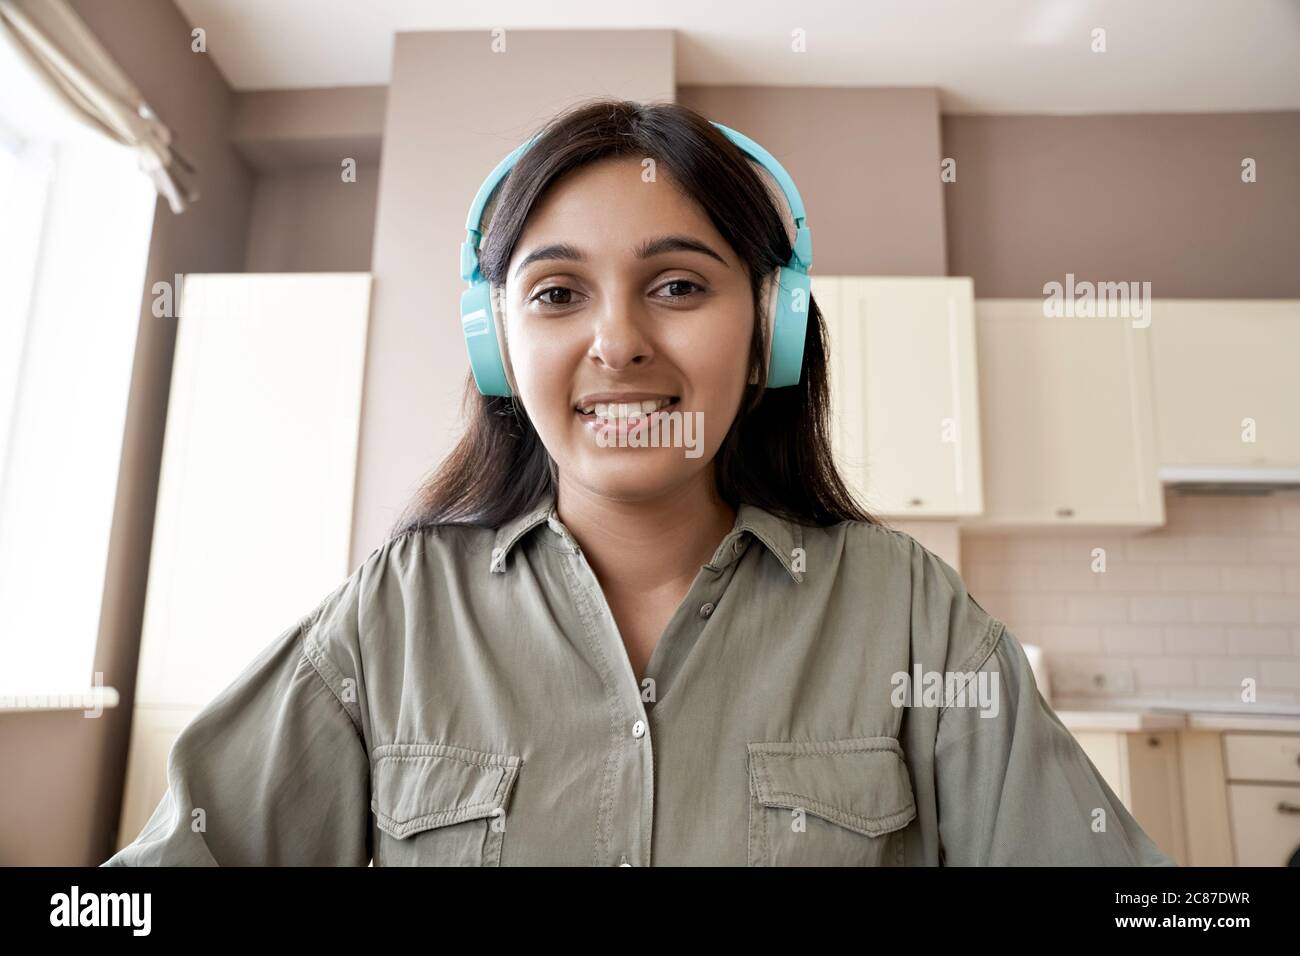 Indian woman student teacher wearing headphones looking at web cam Stock  Photo - Alamy